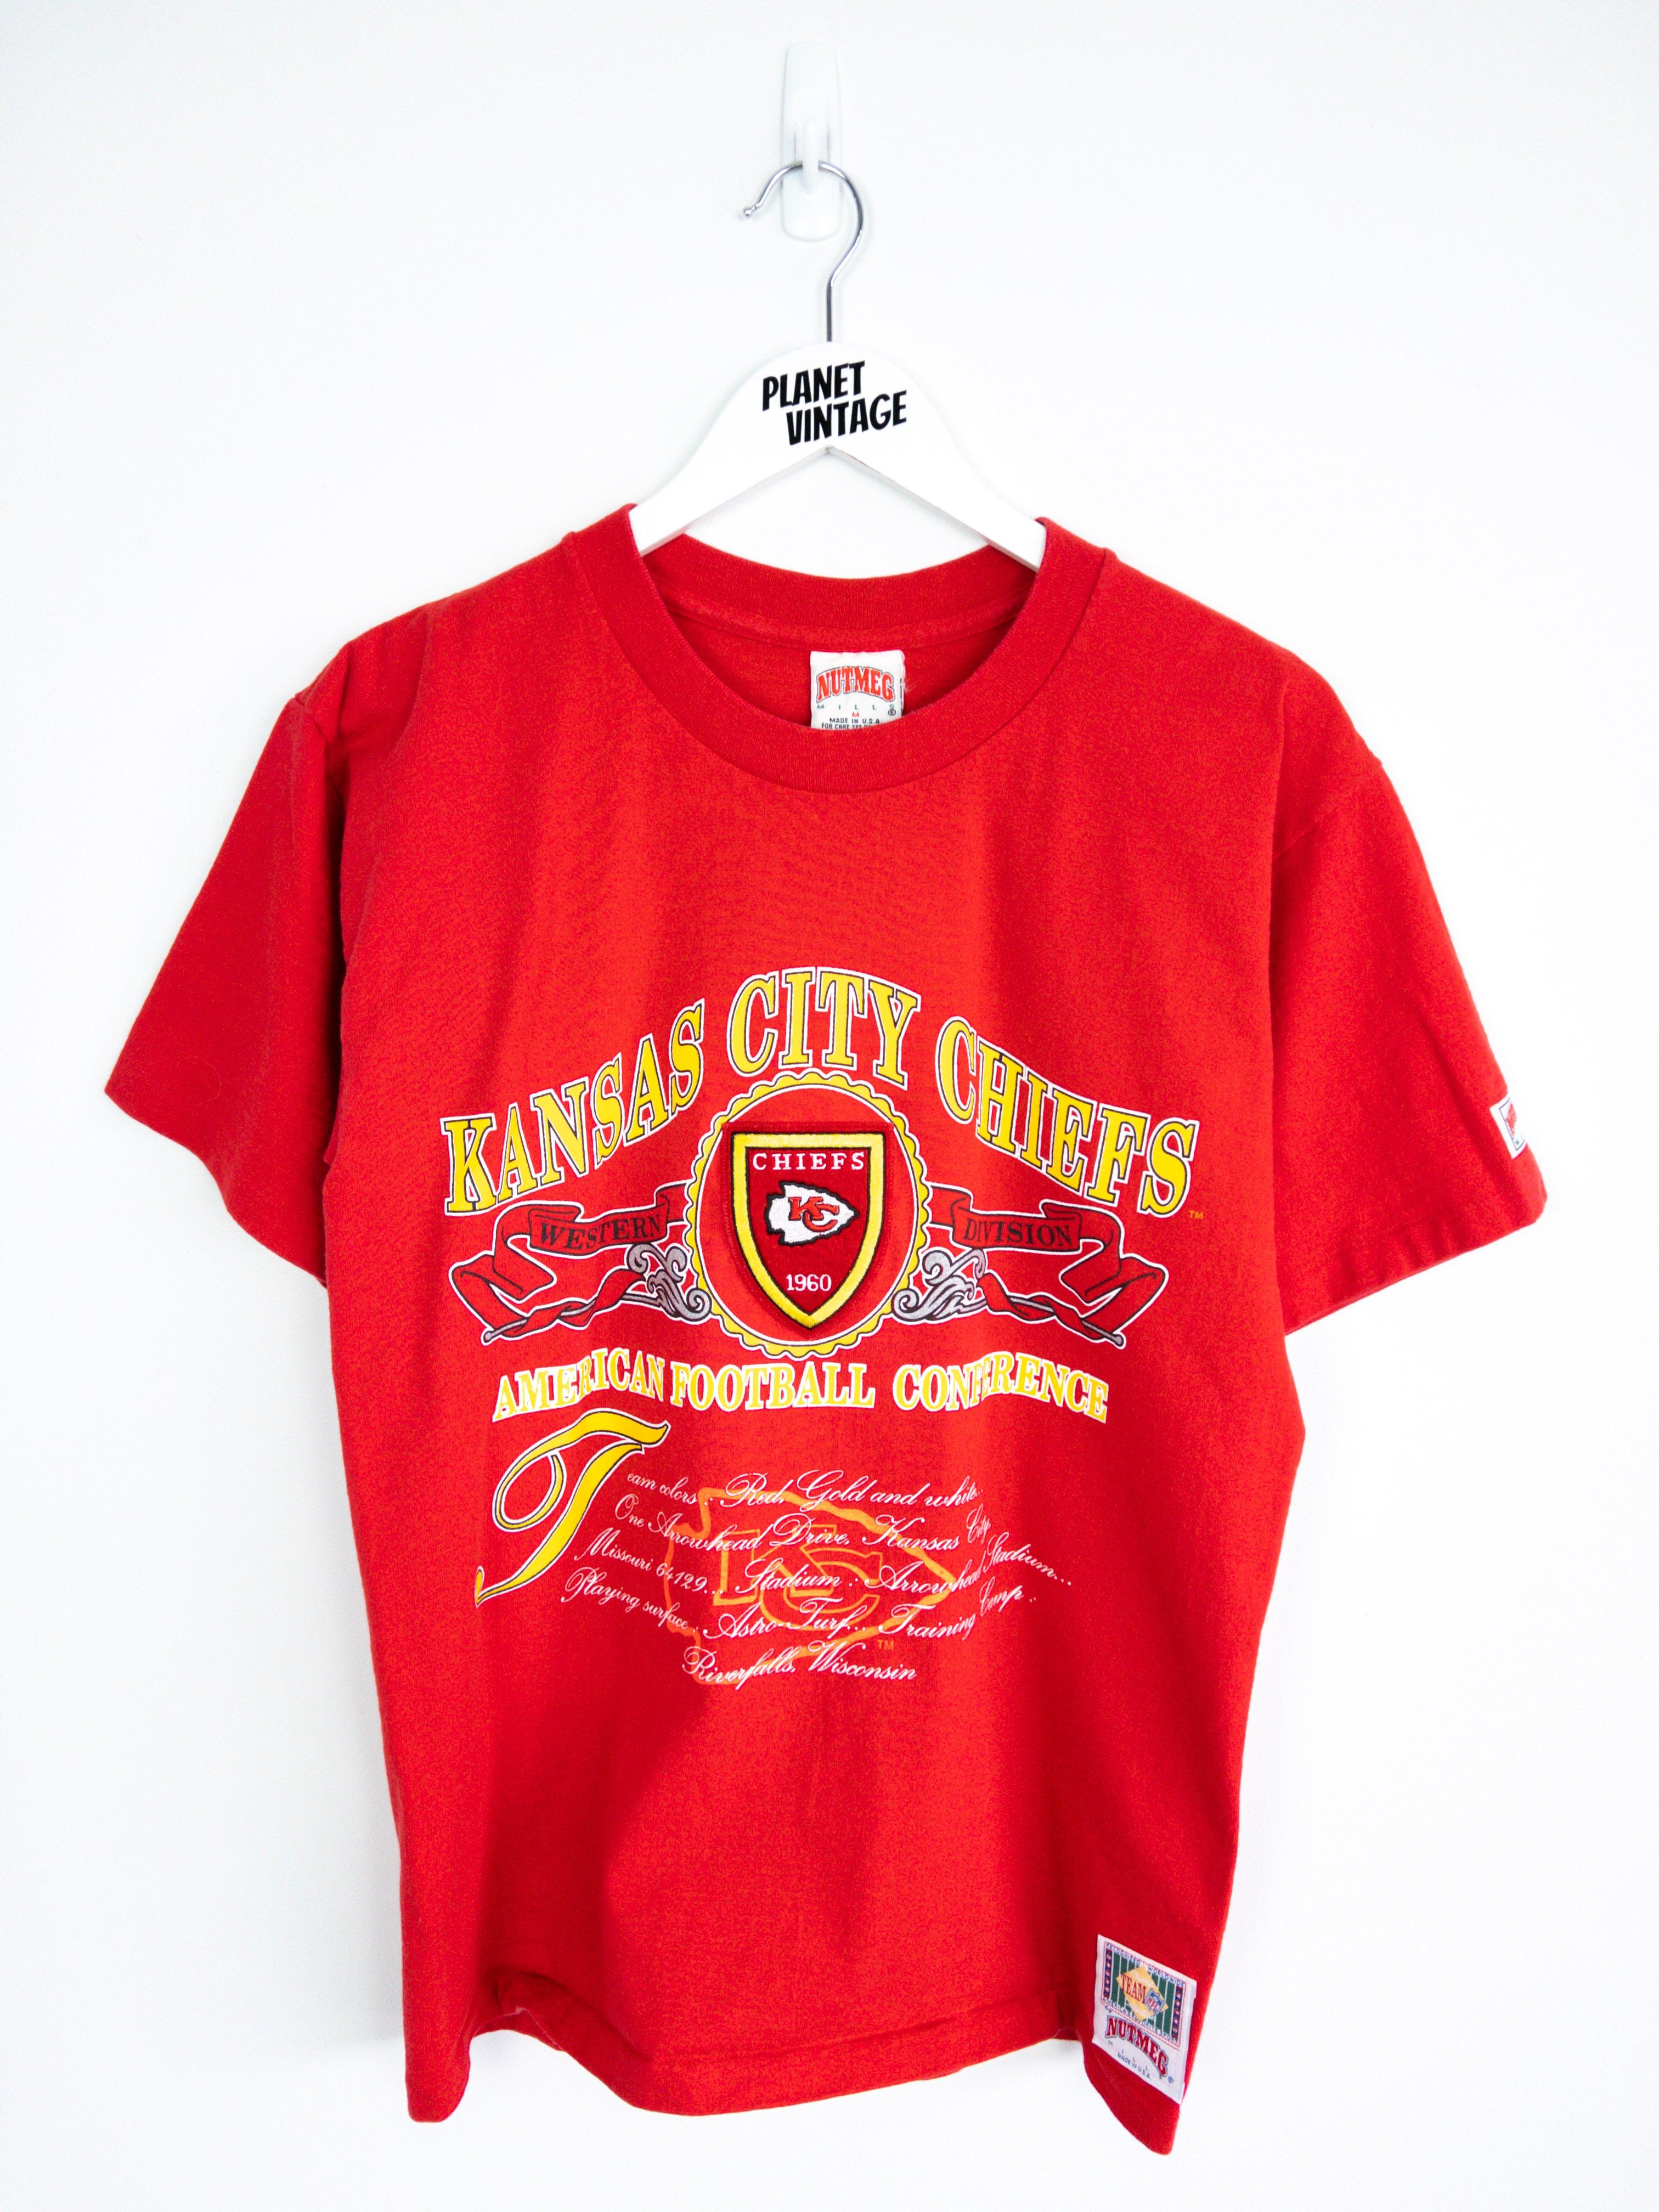 Kansas City Chiefs Tee (M) - Planet Vintage Store